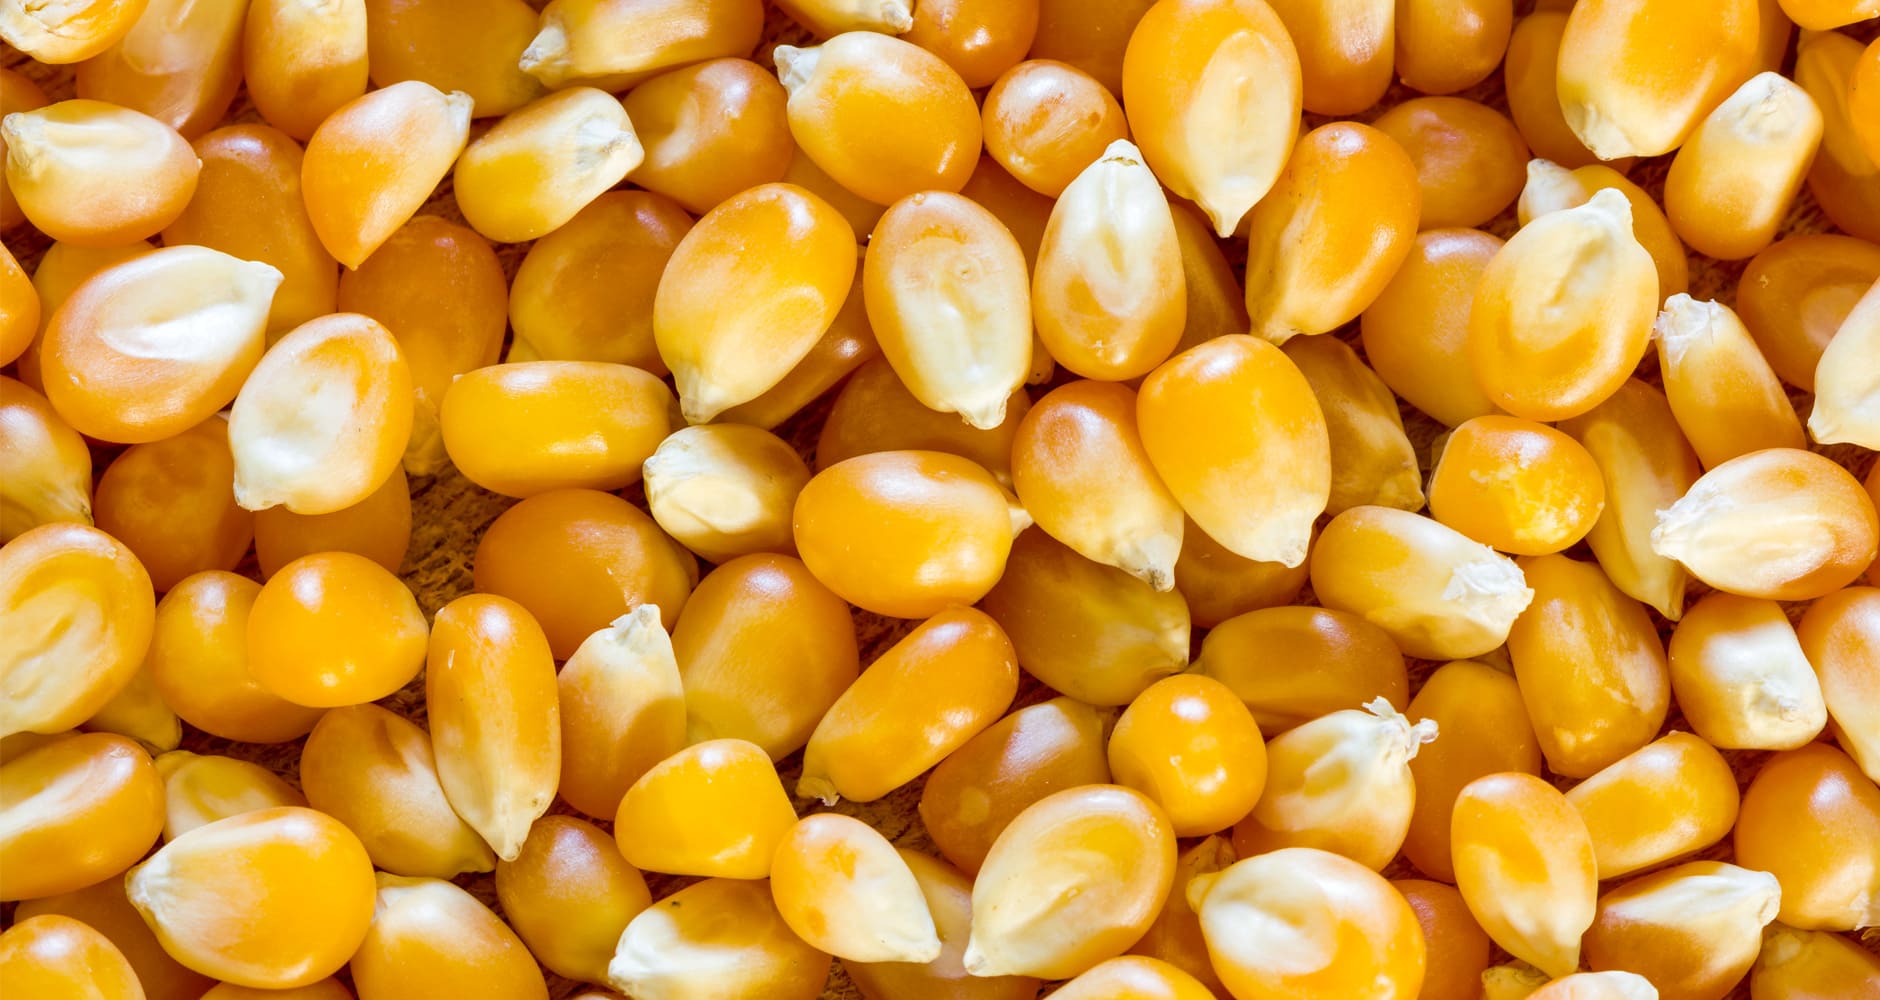 growing popcorn - image of popcorn kernels